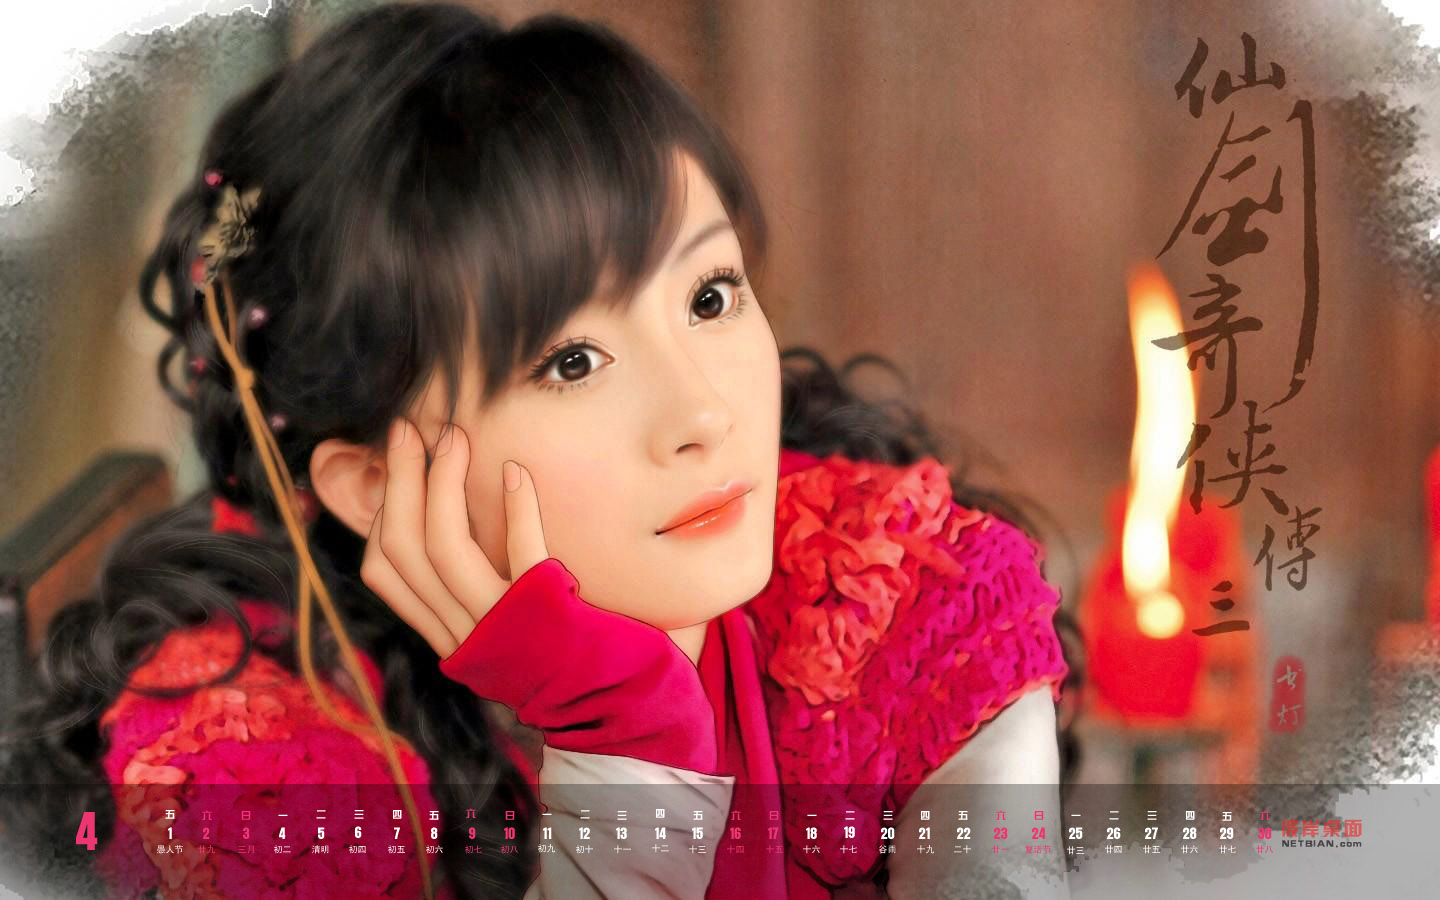 Love Support Yang Mi, April 2011 Calendar Calendar Desktop Wallpaper